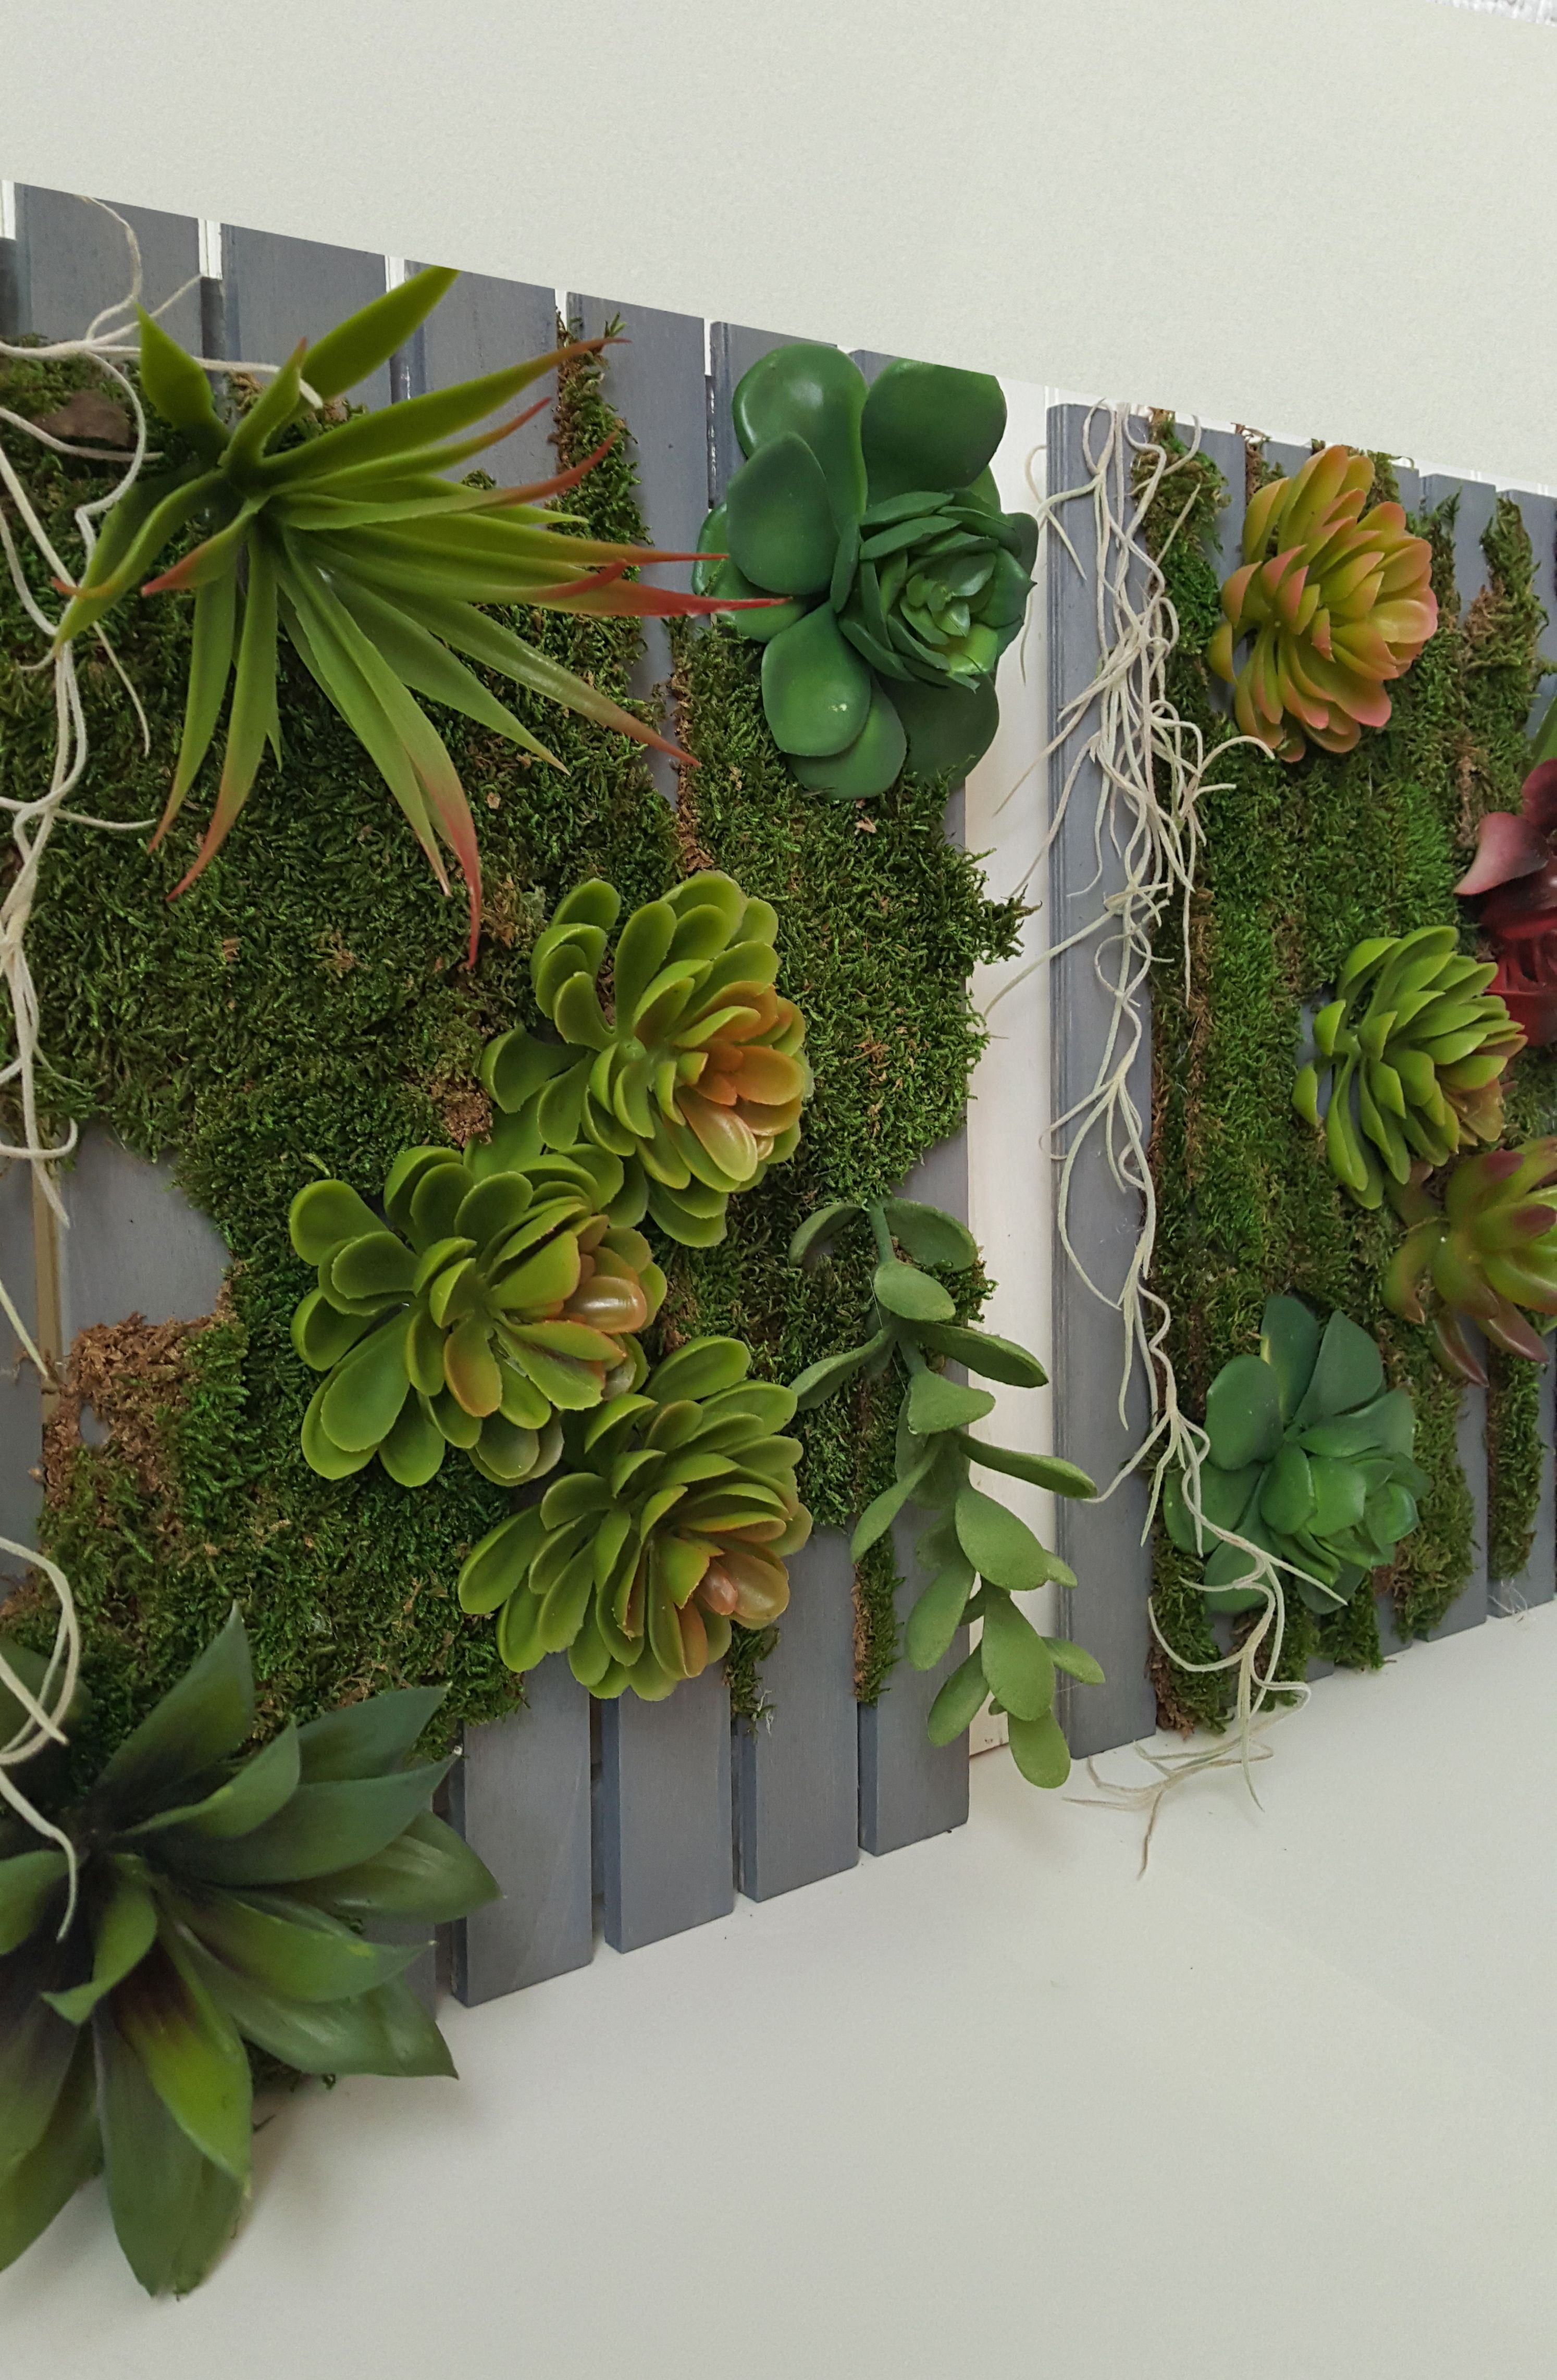 Best ideas about DIY Succulent Gardens
. Save or Pin DIY Vertical Succulent Garden Now.